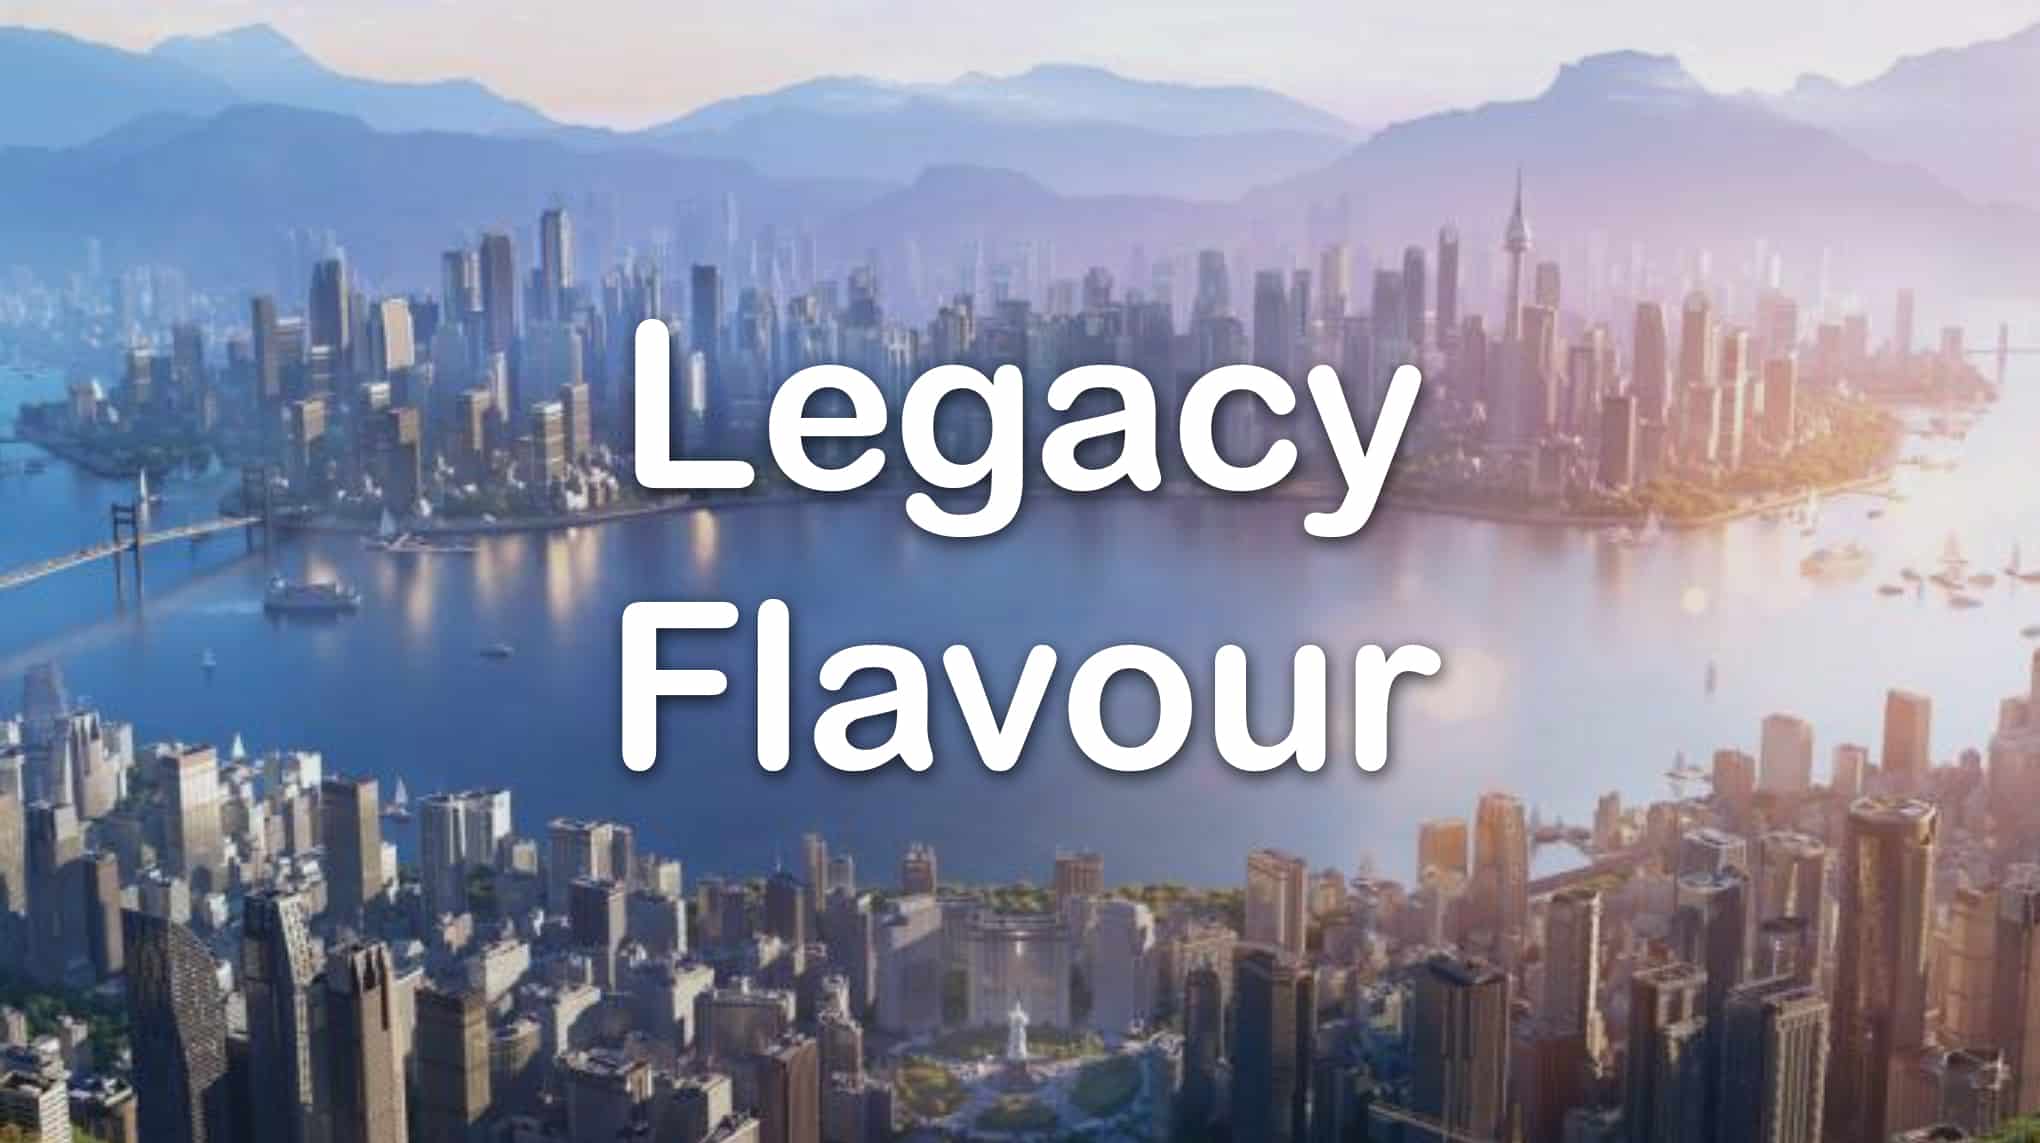 Legacies and Legends - Minecraft Mod